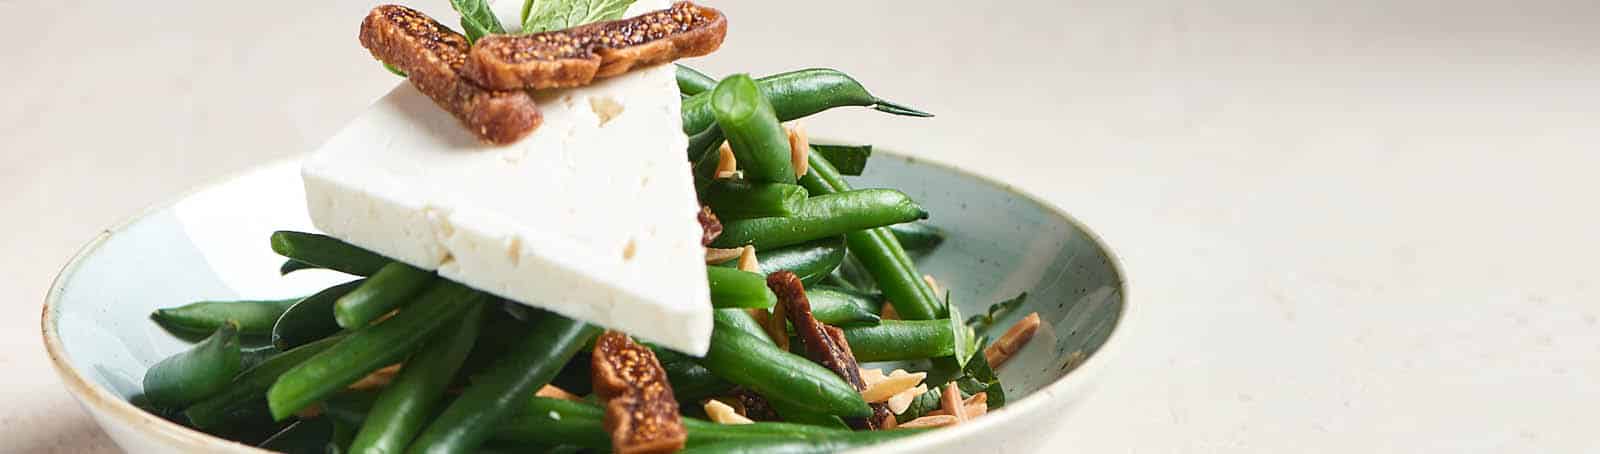 3 ways to enjoy your green bean salad